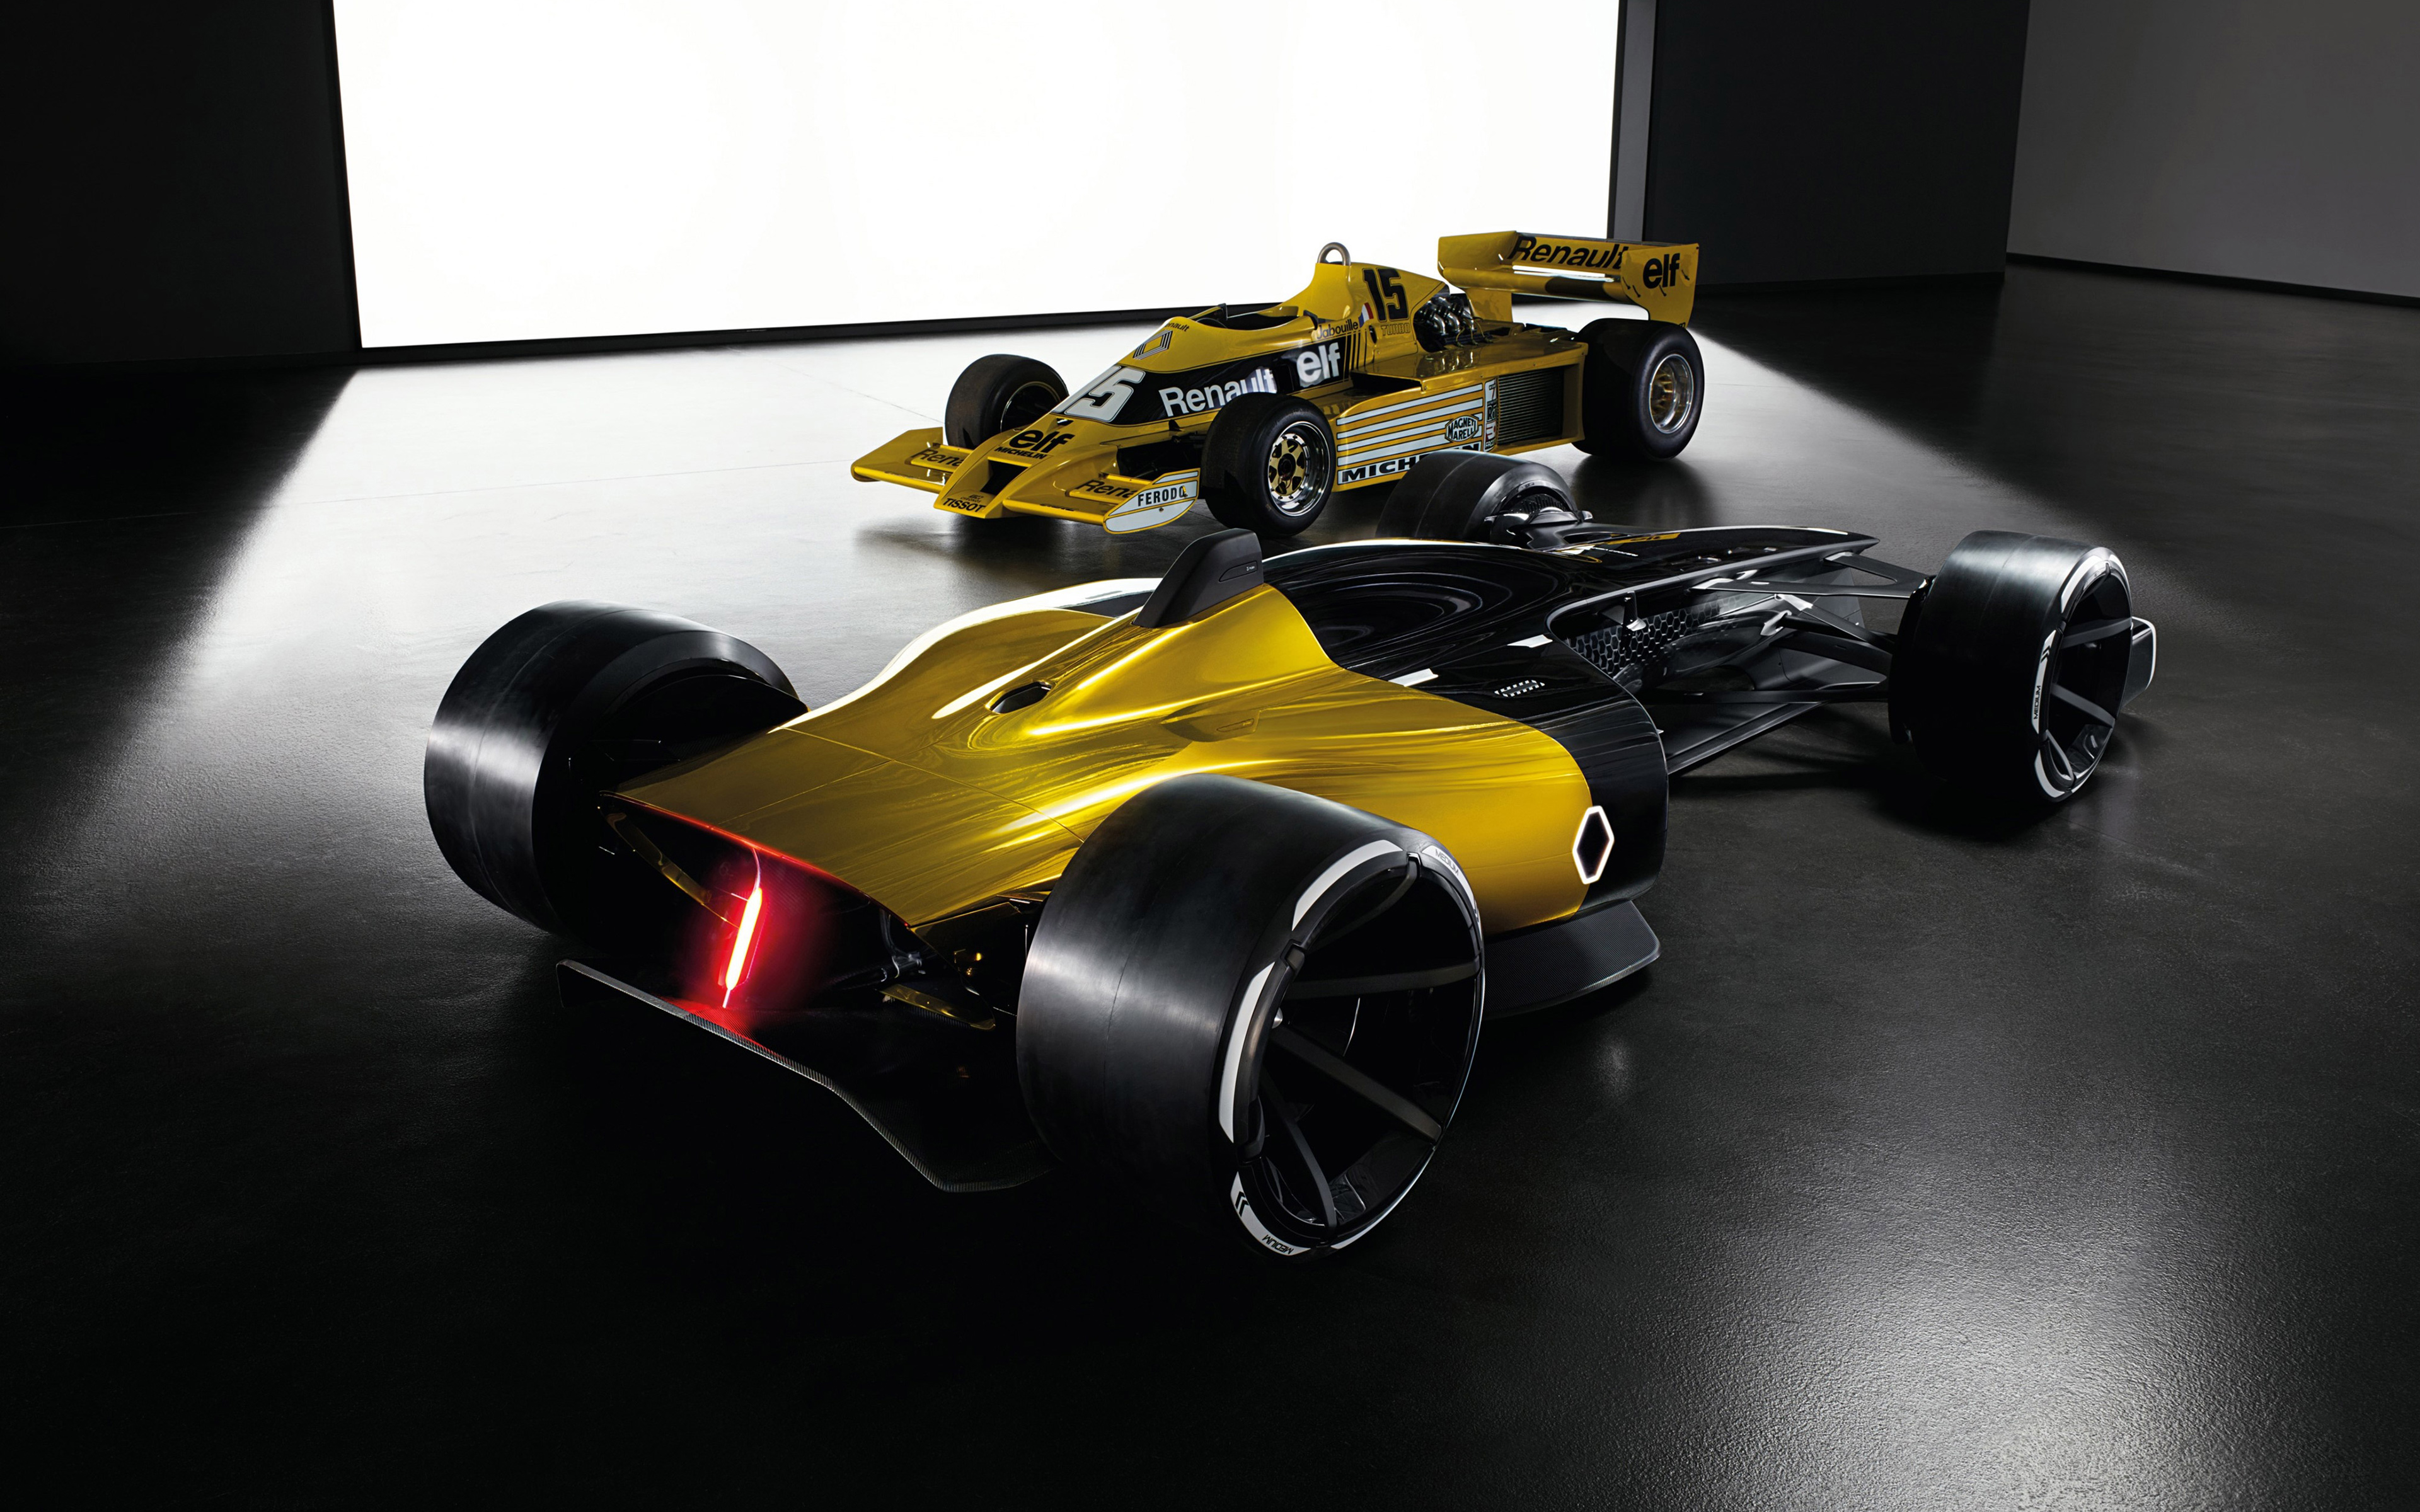 Renault RS 2027 Vision Concept F1 Car 4K24286103 - Renault RS 2027 Vision Concept F1 Car 4K - Vision, Renault, Concept, Car, 2027, 2017